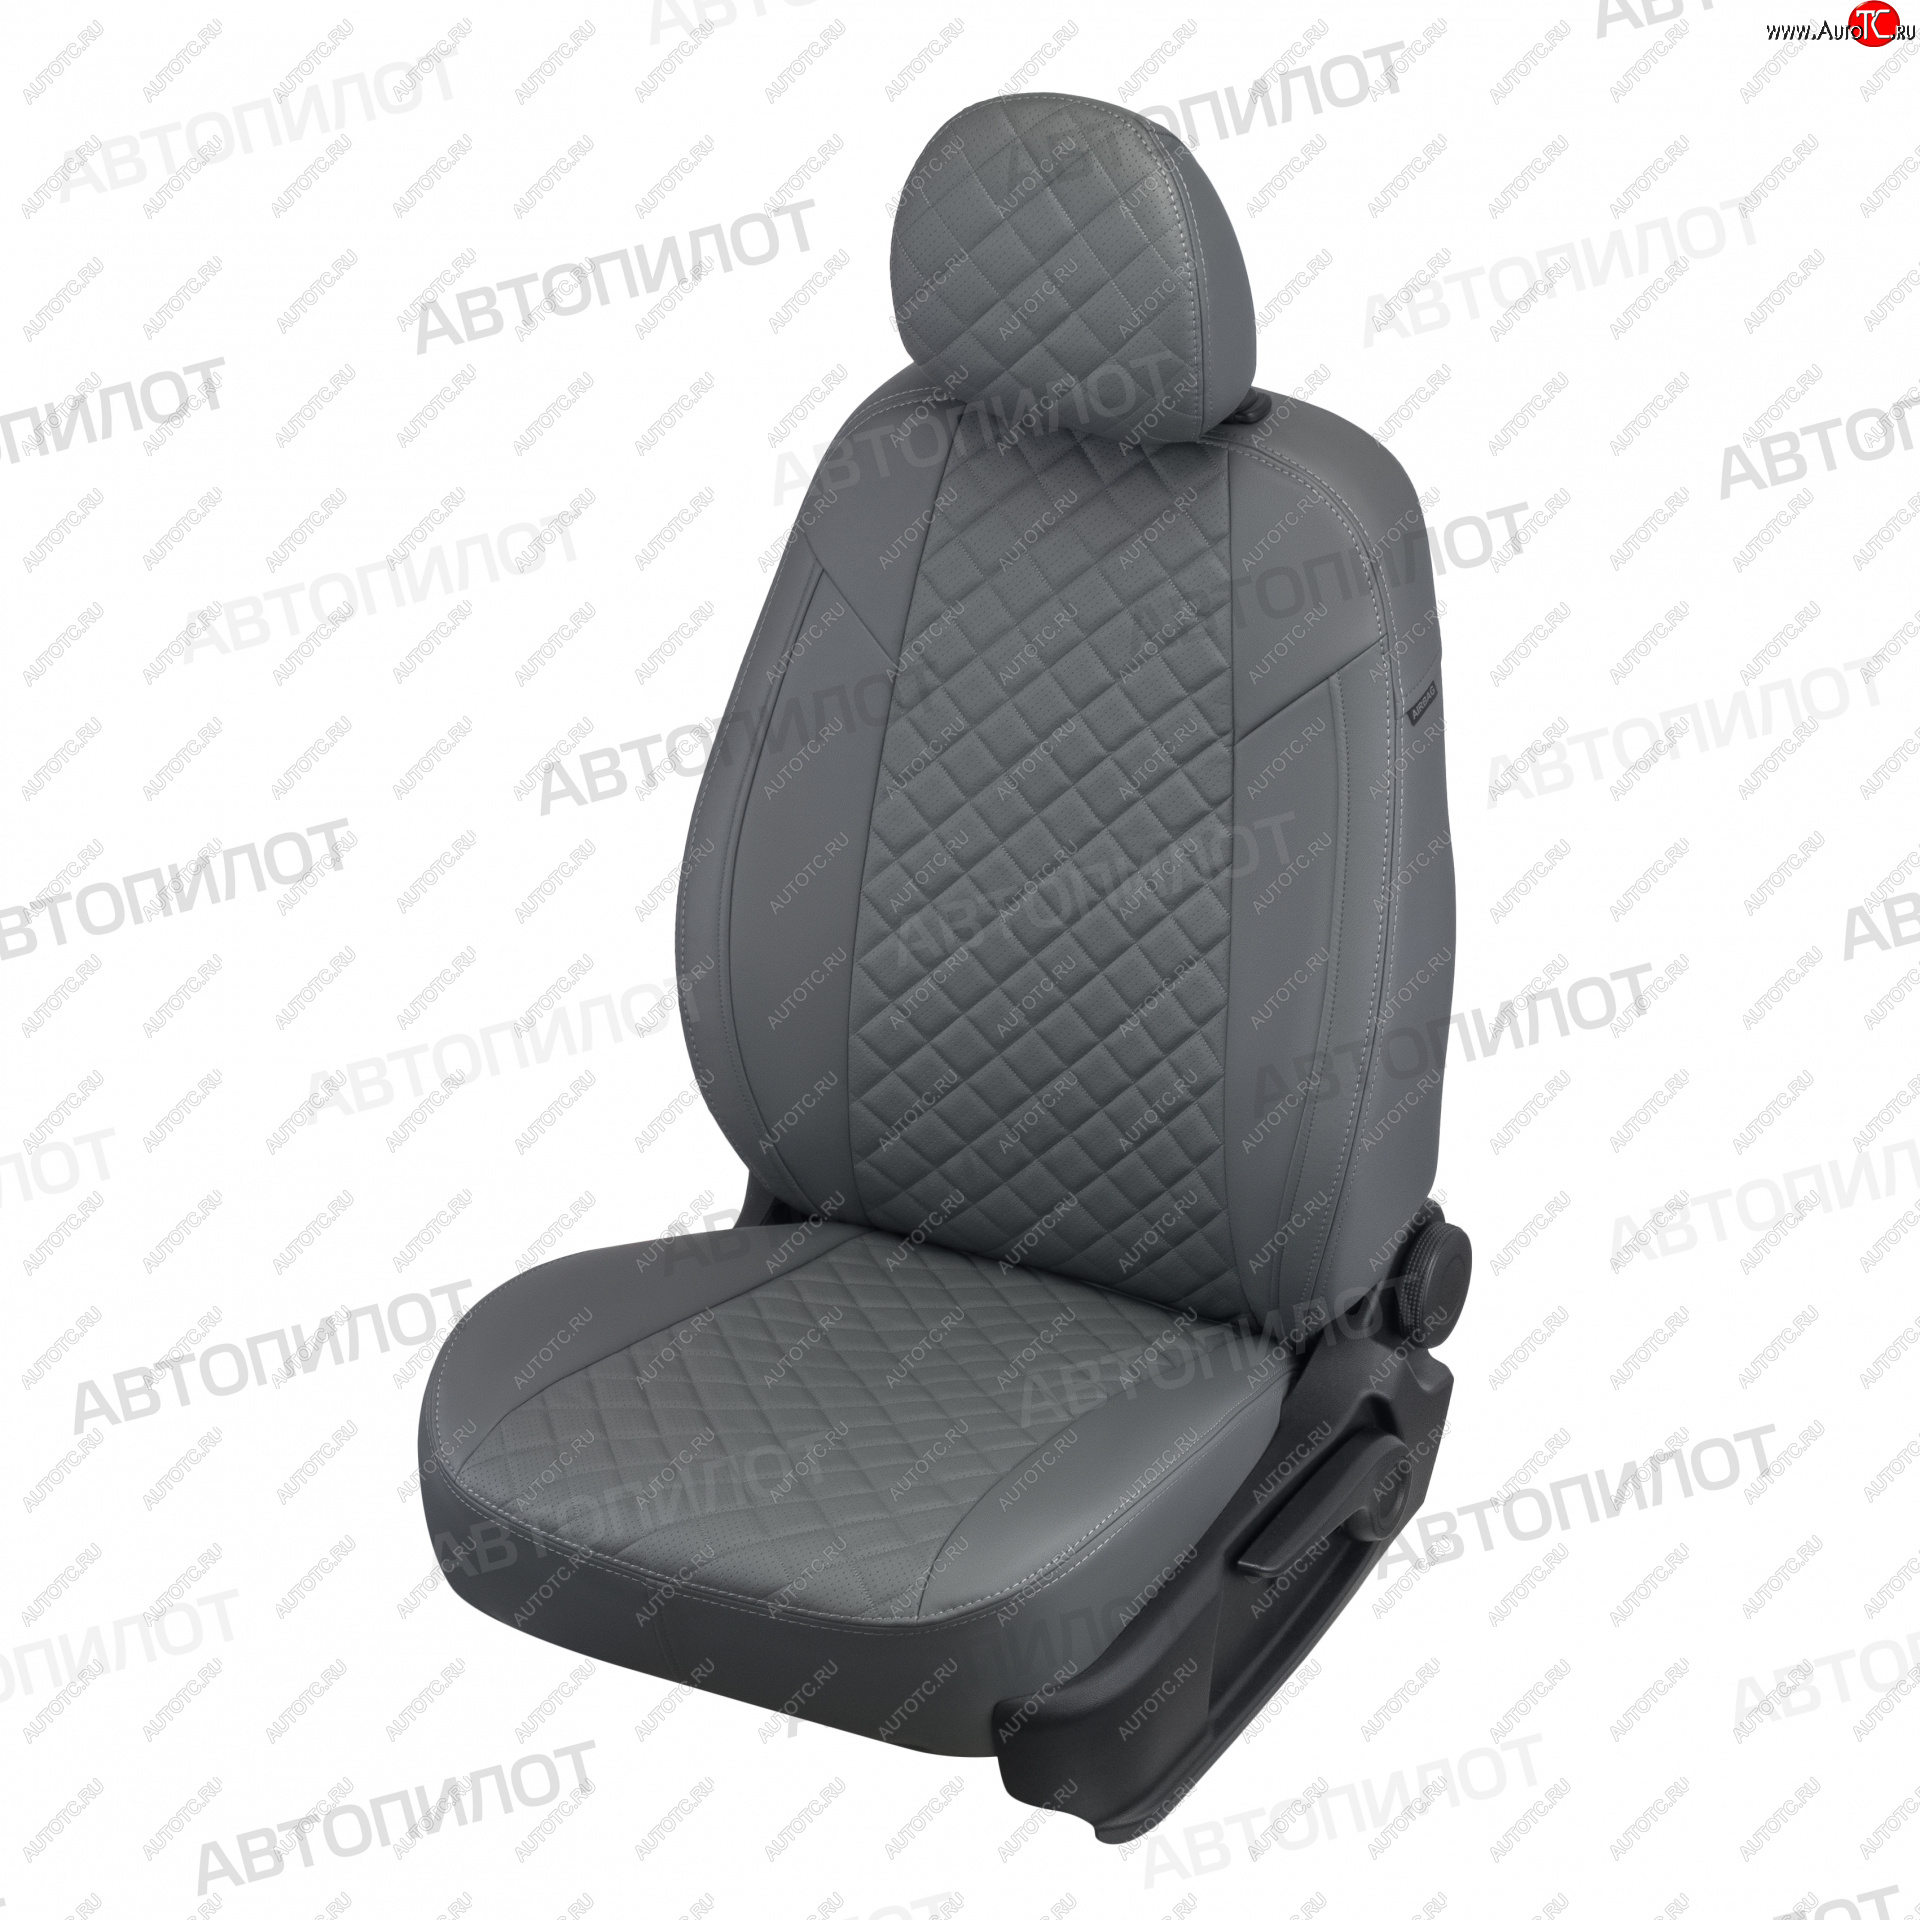 13 999 р. Чехлы сидений (экокожа) Автопилот Ромб  Ford Fiesta  6 (2008-2019) (серый)